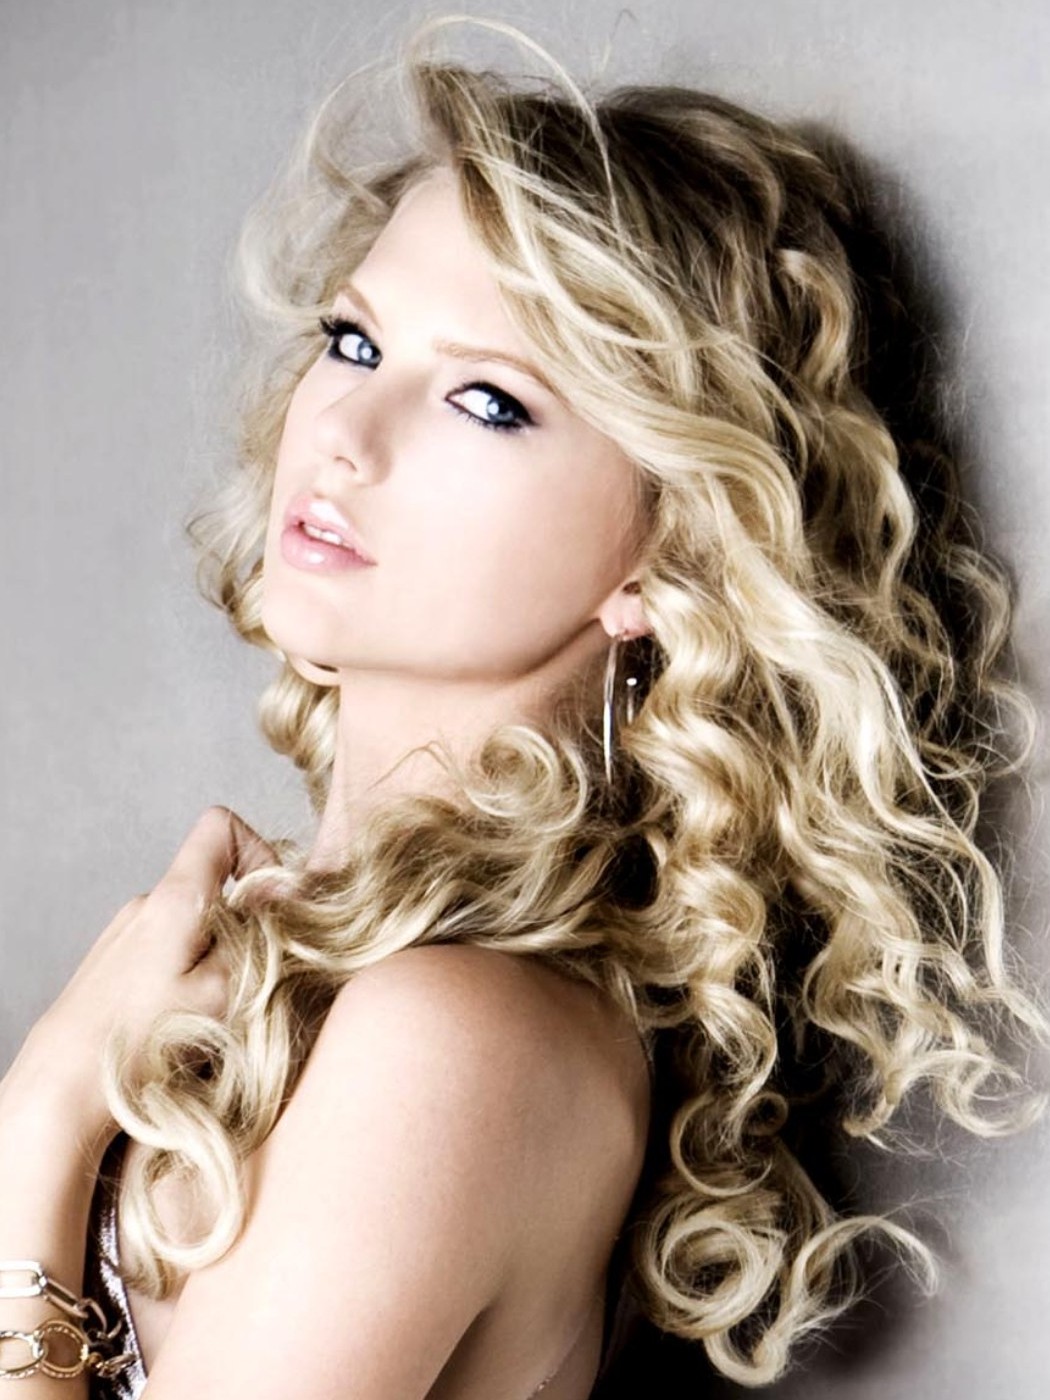 Download full size Taylor Swift wallpaper / Celebrities Female / 1050x1400